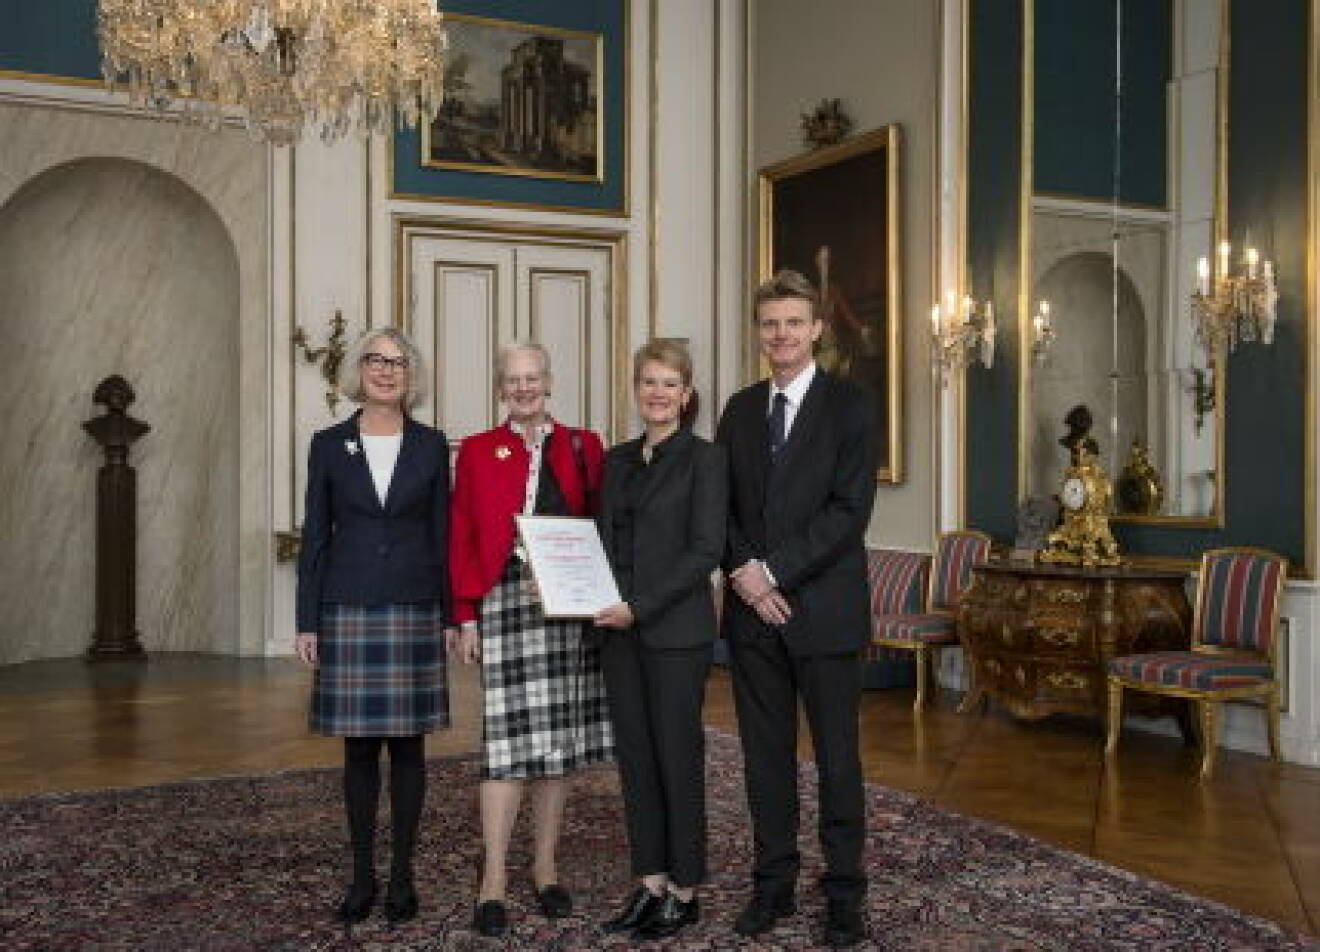 Queen Margrethe presents rheumatism science award